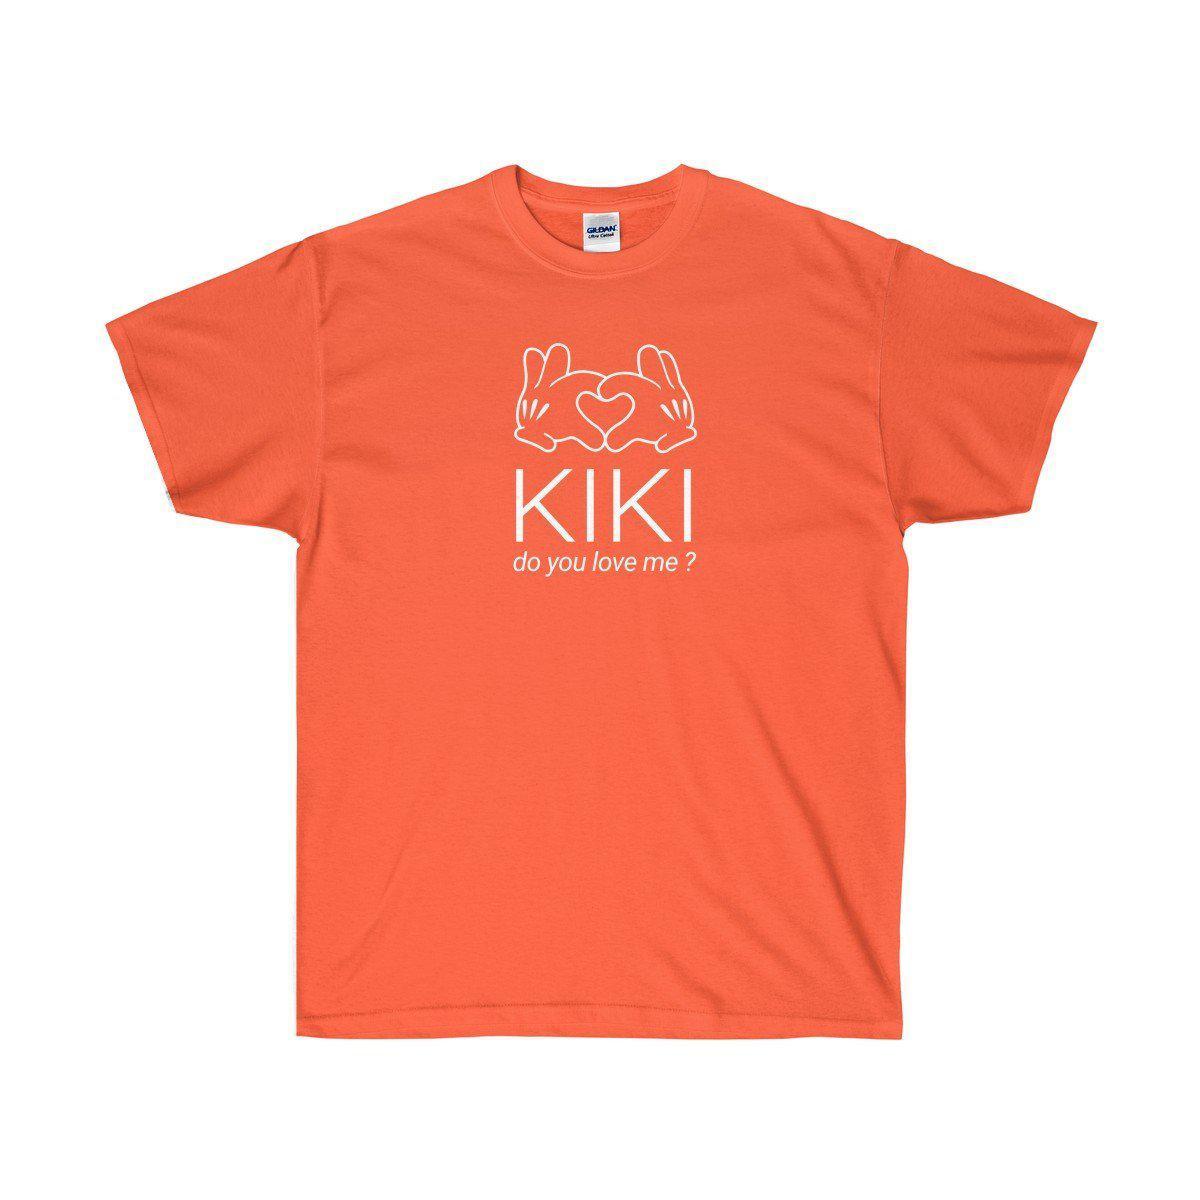 Kiki do you love me? In my feelings Tee - Drake inspired-Orange-S-Archethype